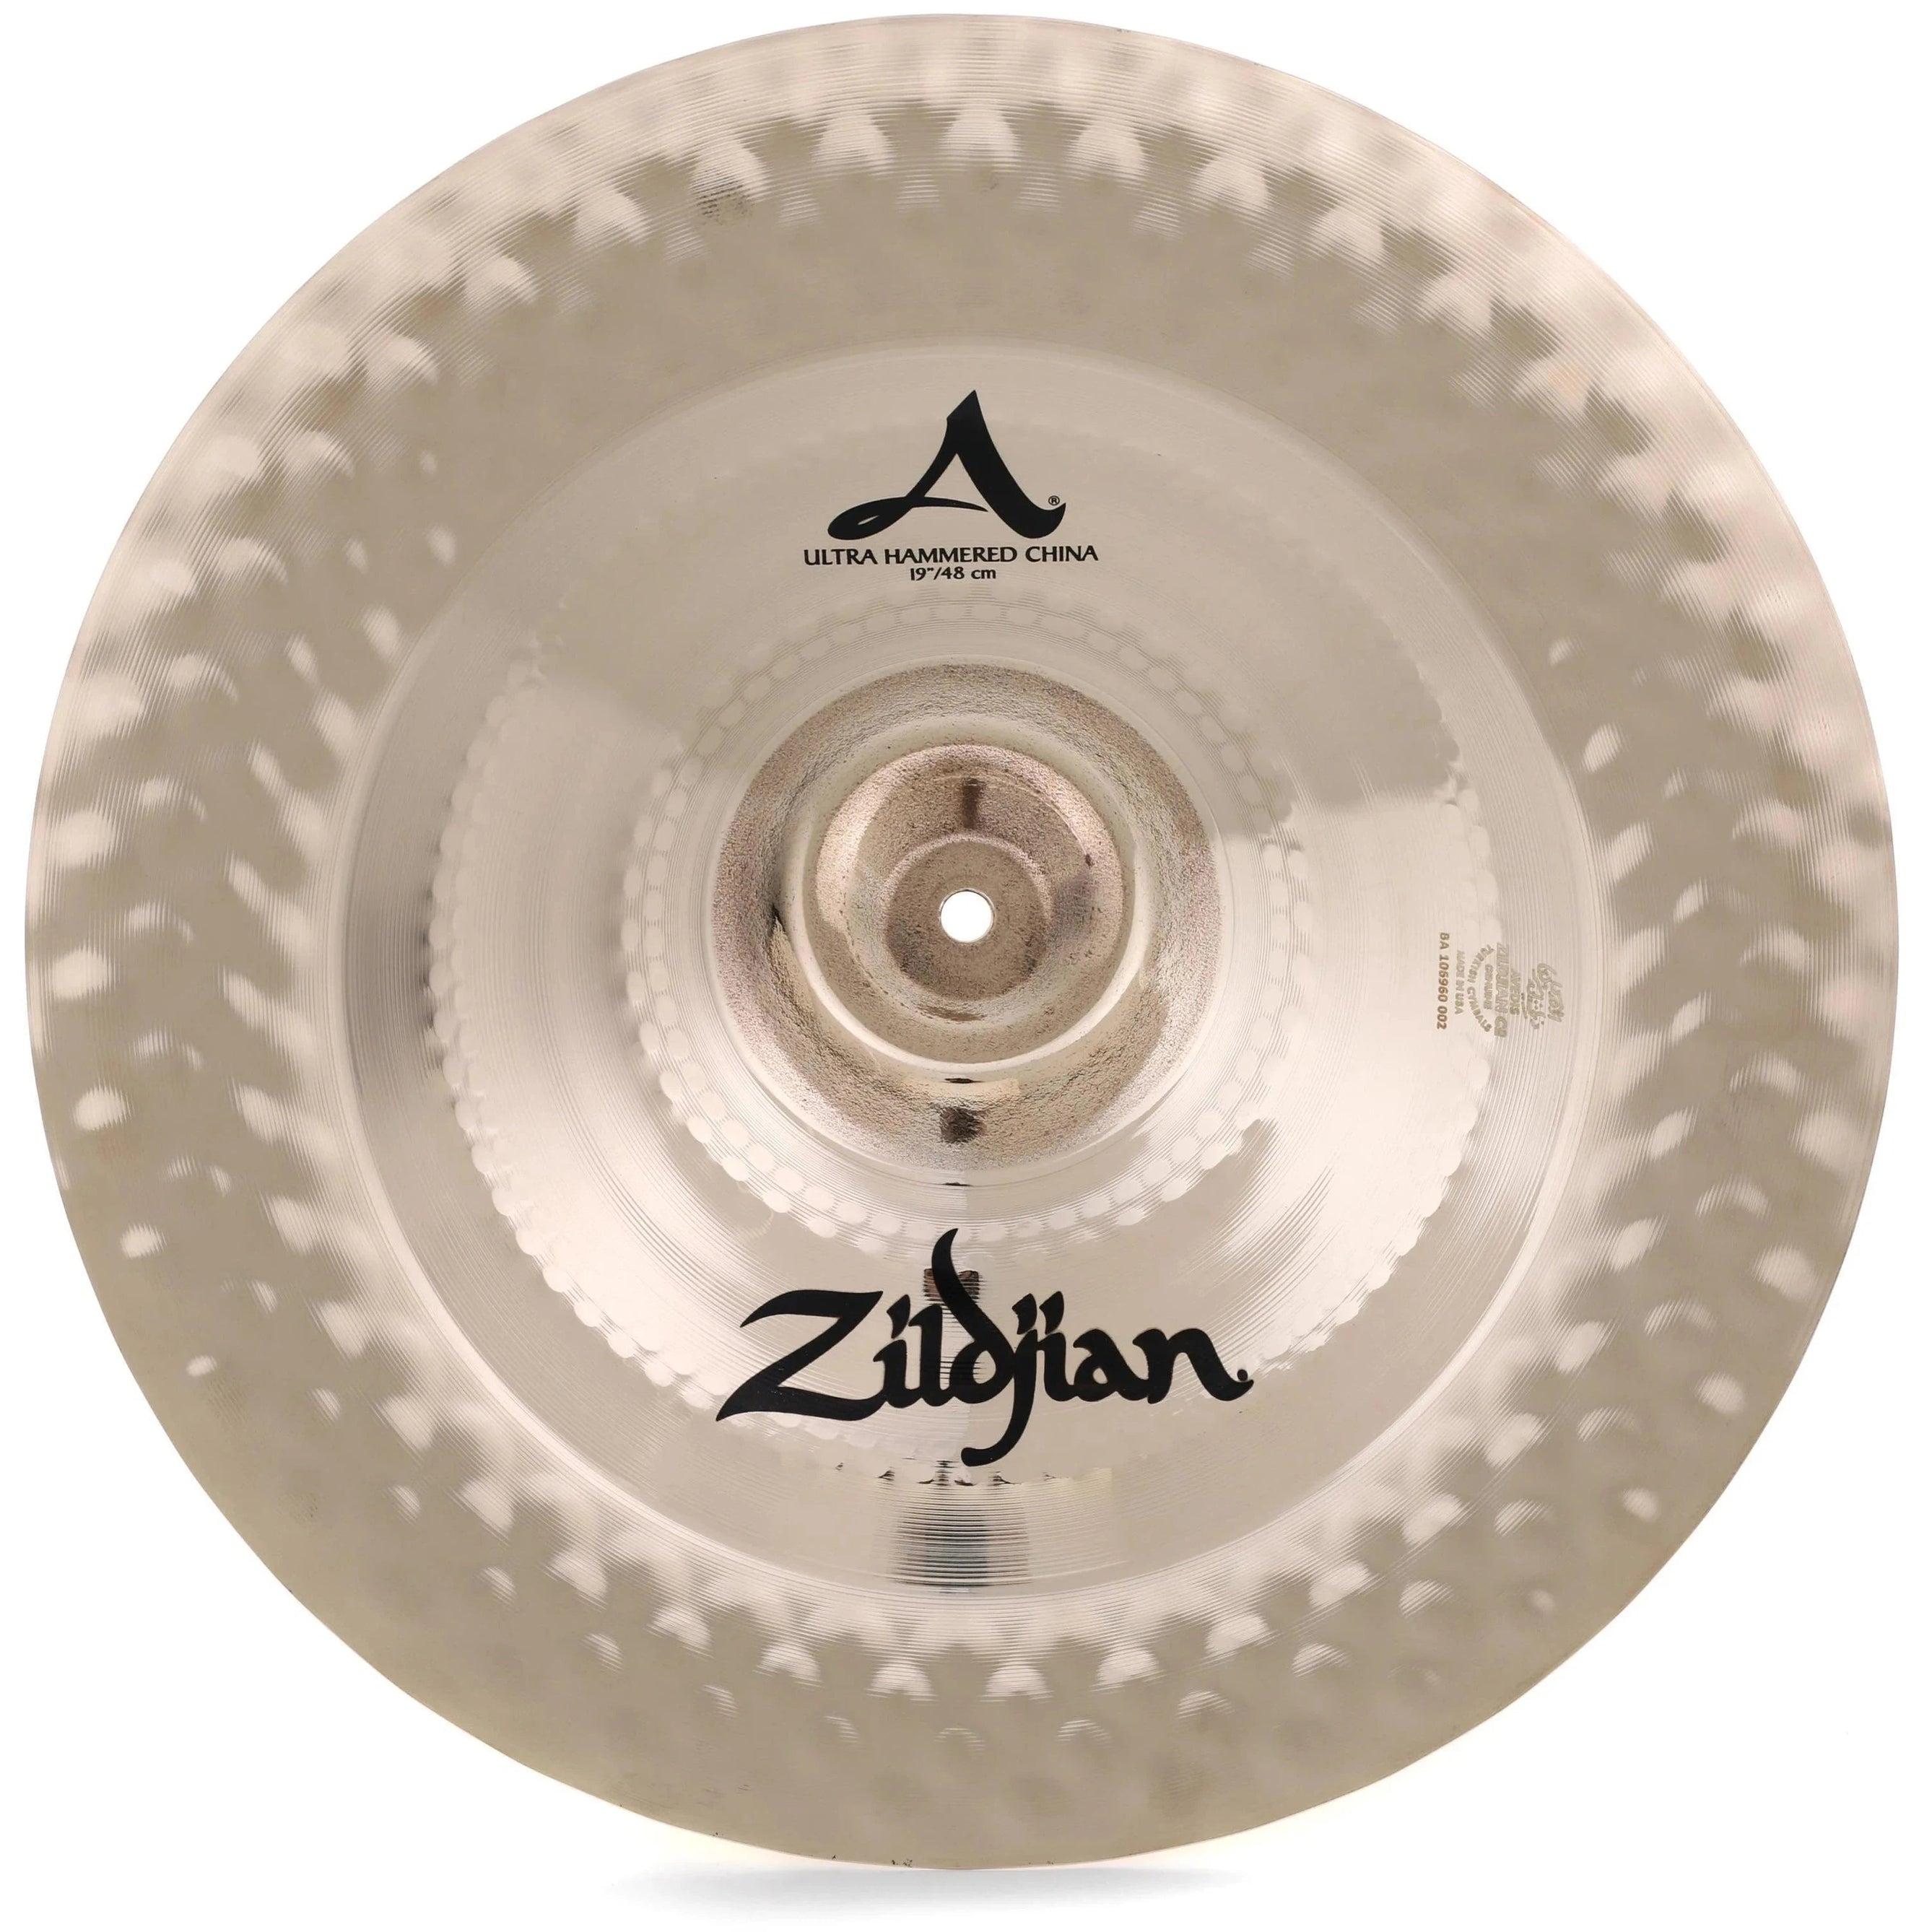 China Cymbal Zildjian A Ultra Hammered-Mai Nguyên Music